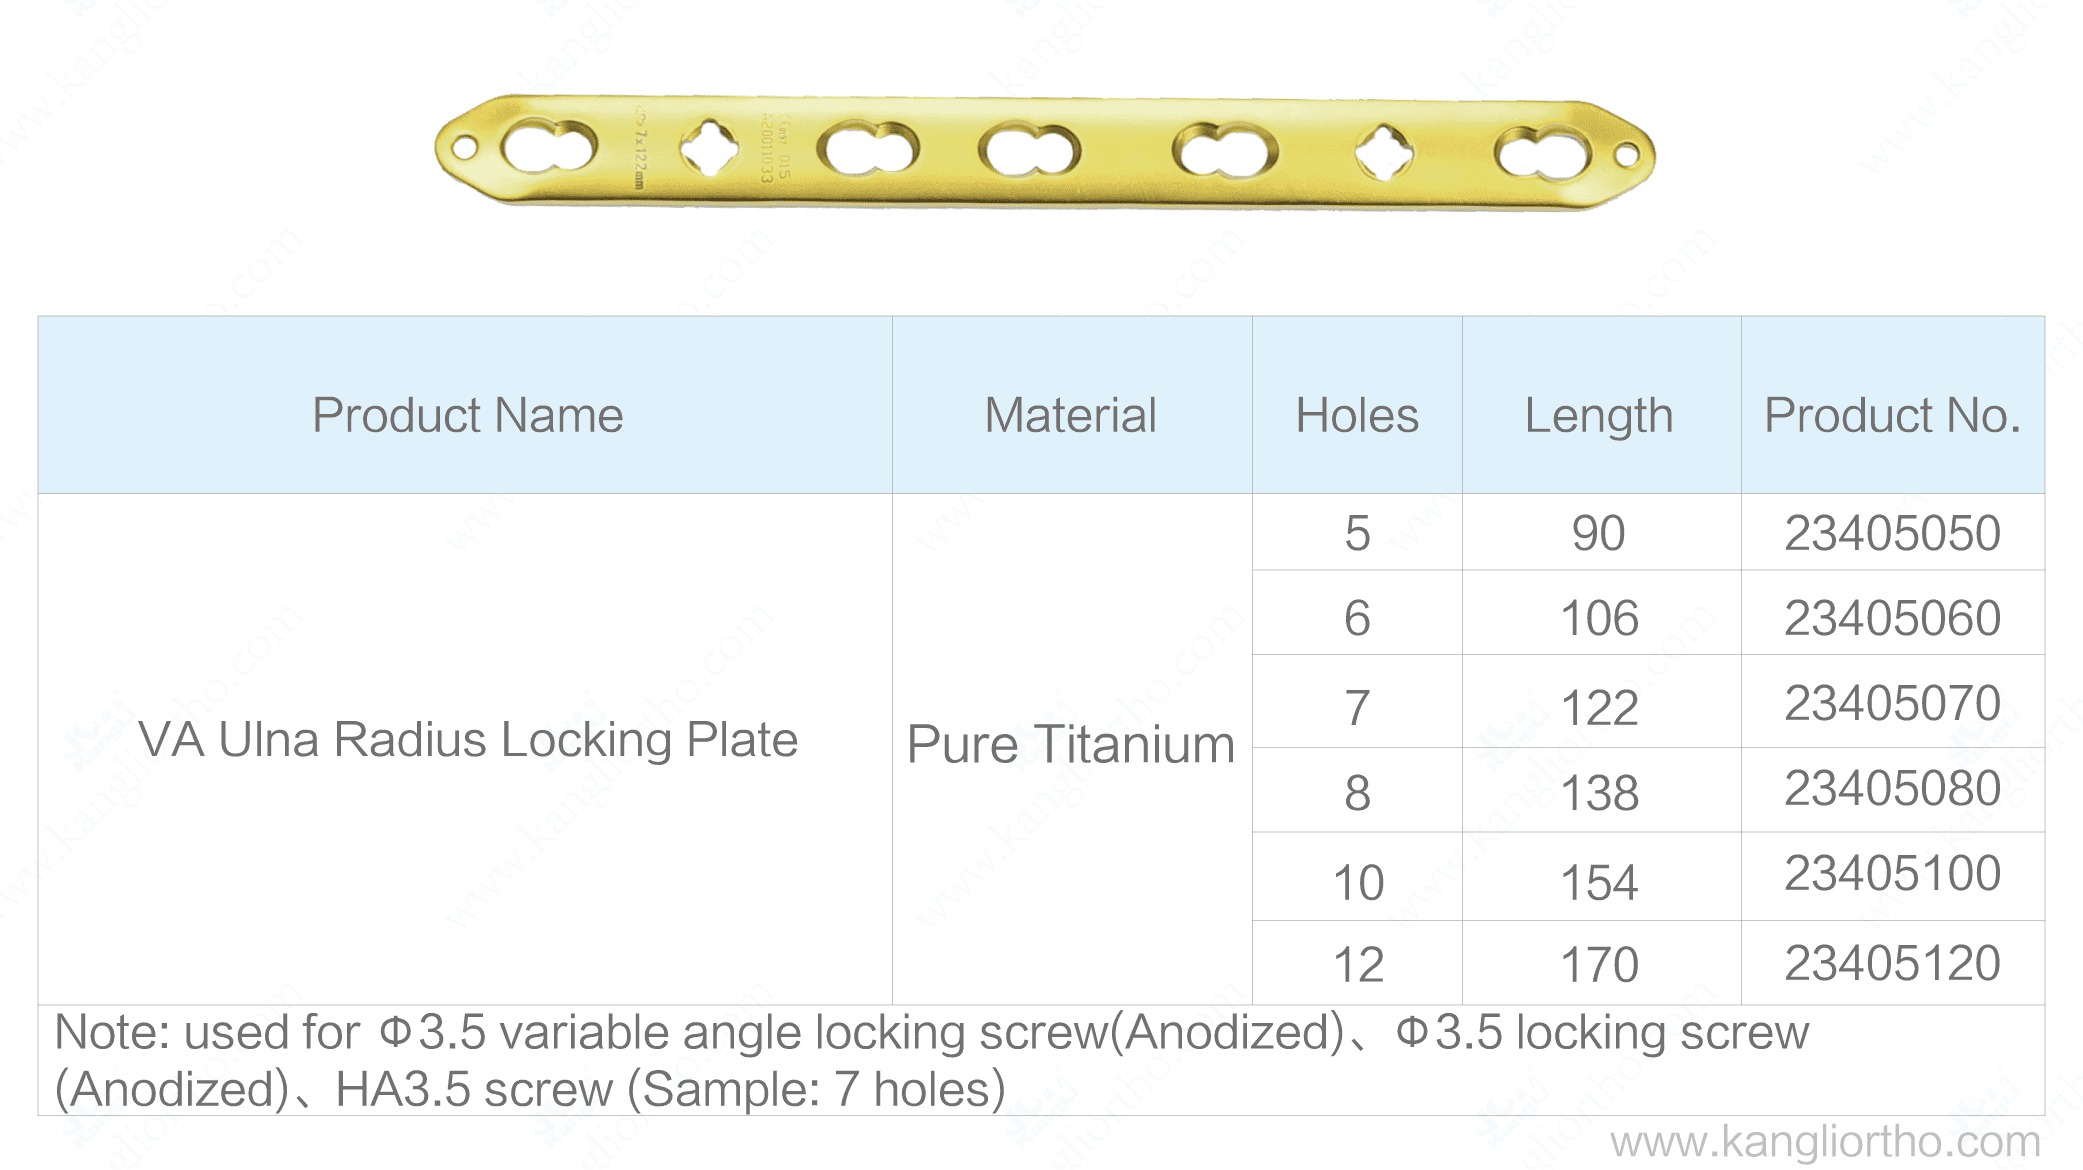 va-ulna-radius-locking-plate-specifications